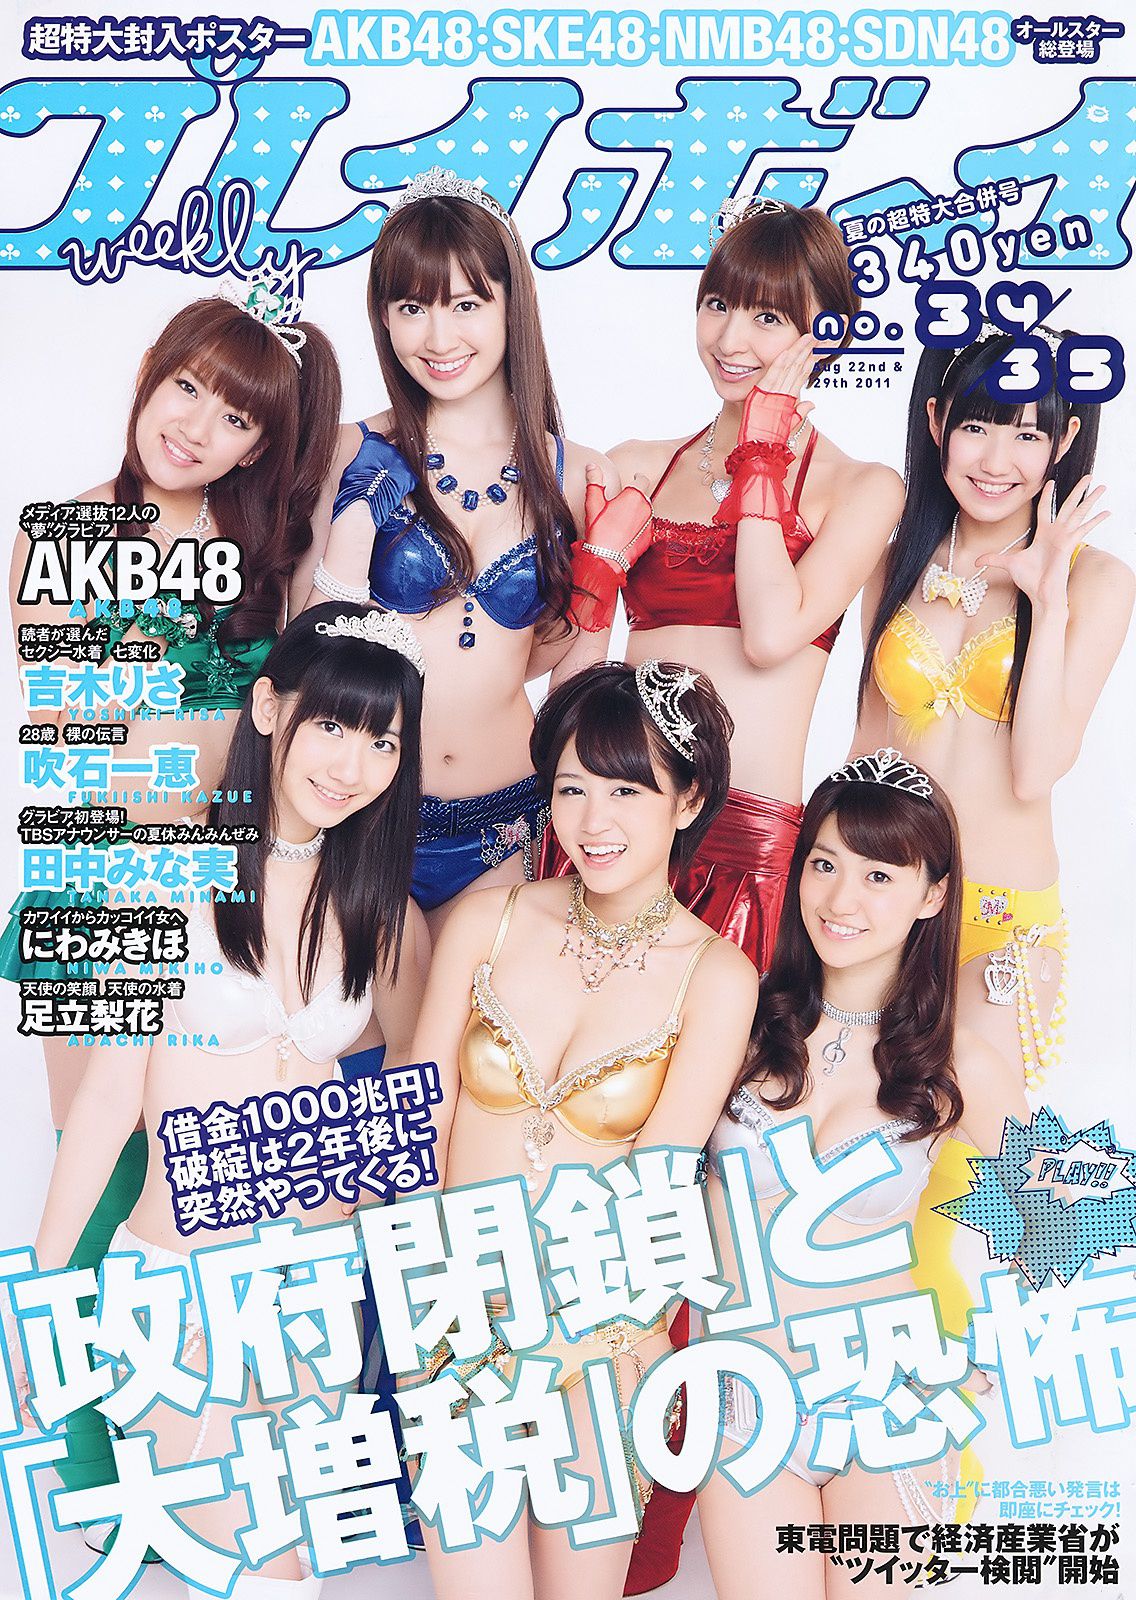 [Weekly Playboy] 2011年No.34-35 写真杂志